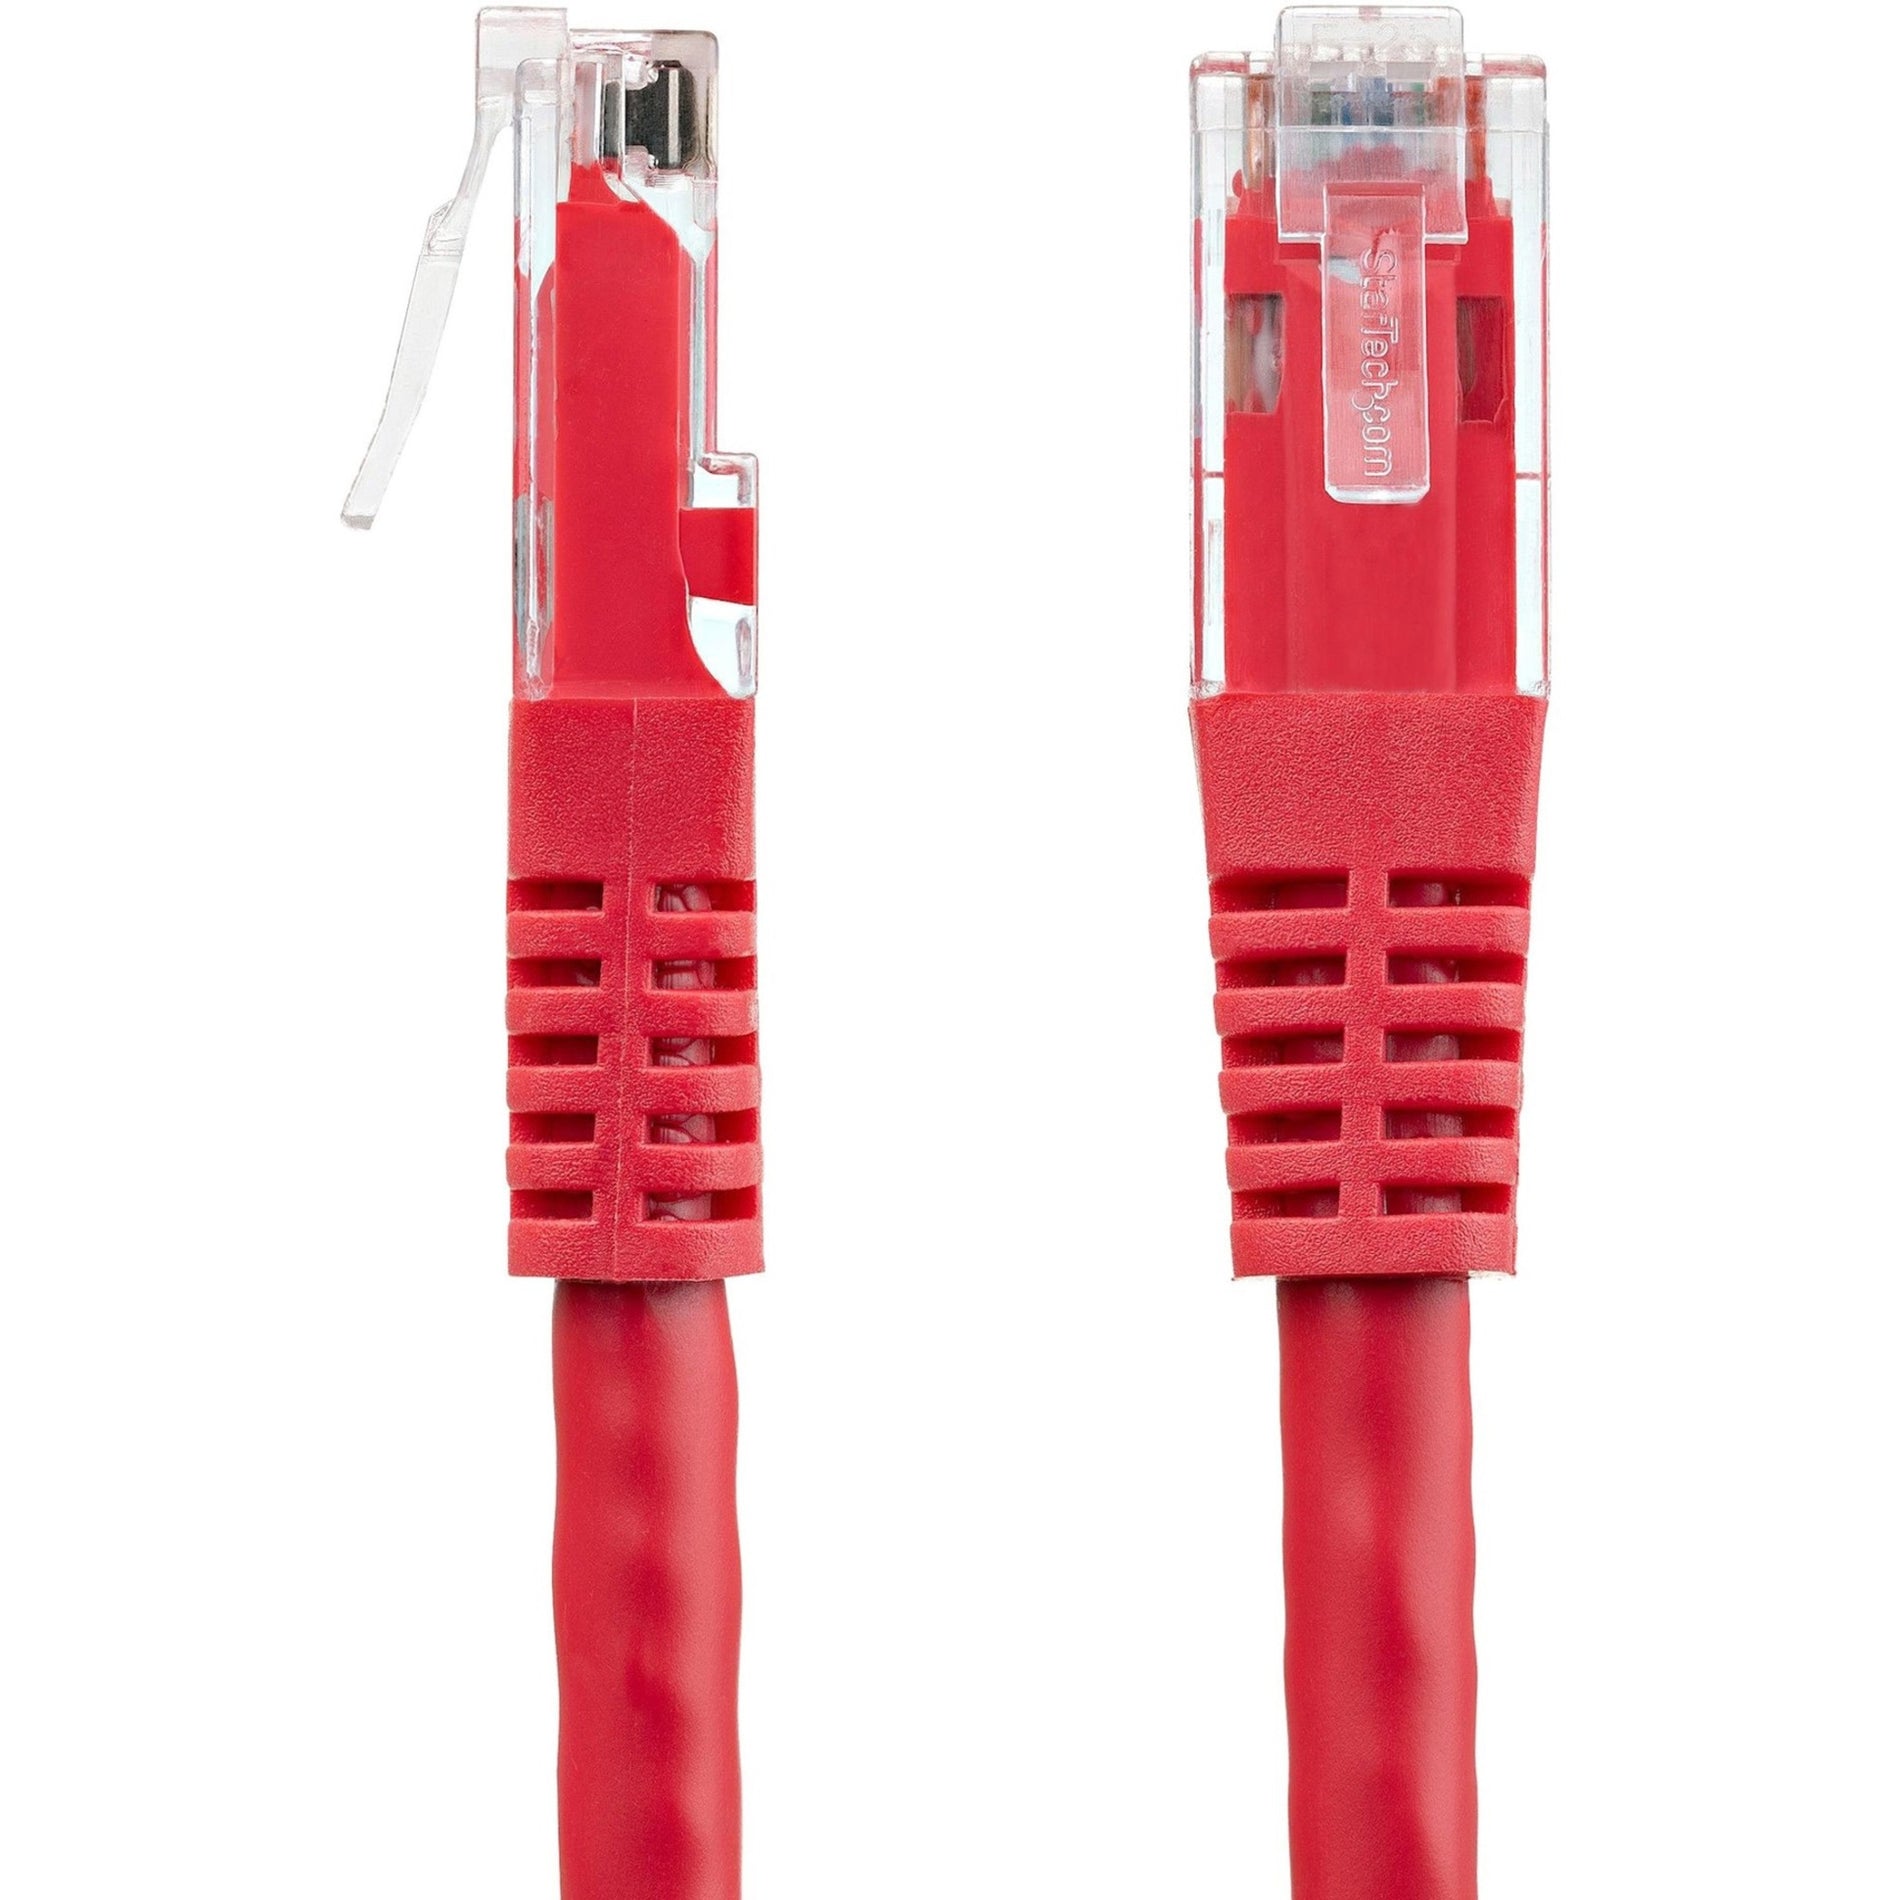 StarTech.com C6PATCH100RD 100ft Red Cat6 UTP Patch Cable ETL Verified, Gigabit Ethernet Network Cord